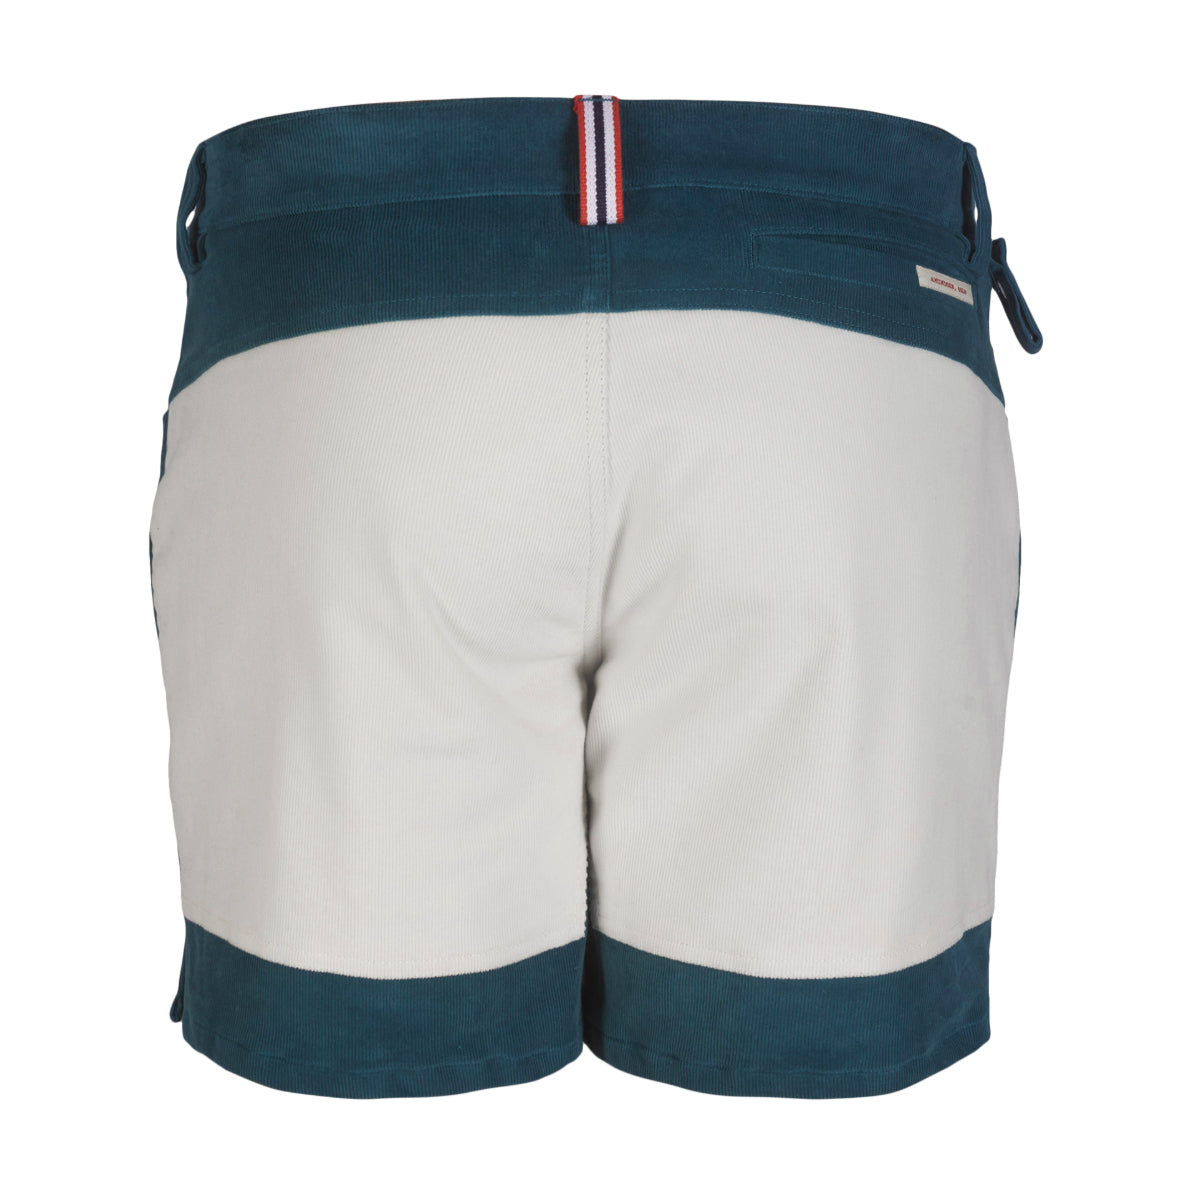 Amundsen Sports - Men's 7 Incher Concord Shorts - Elemental Blue  / Natural